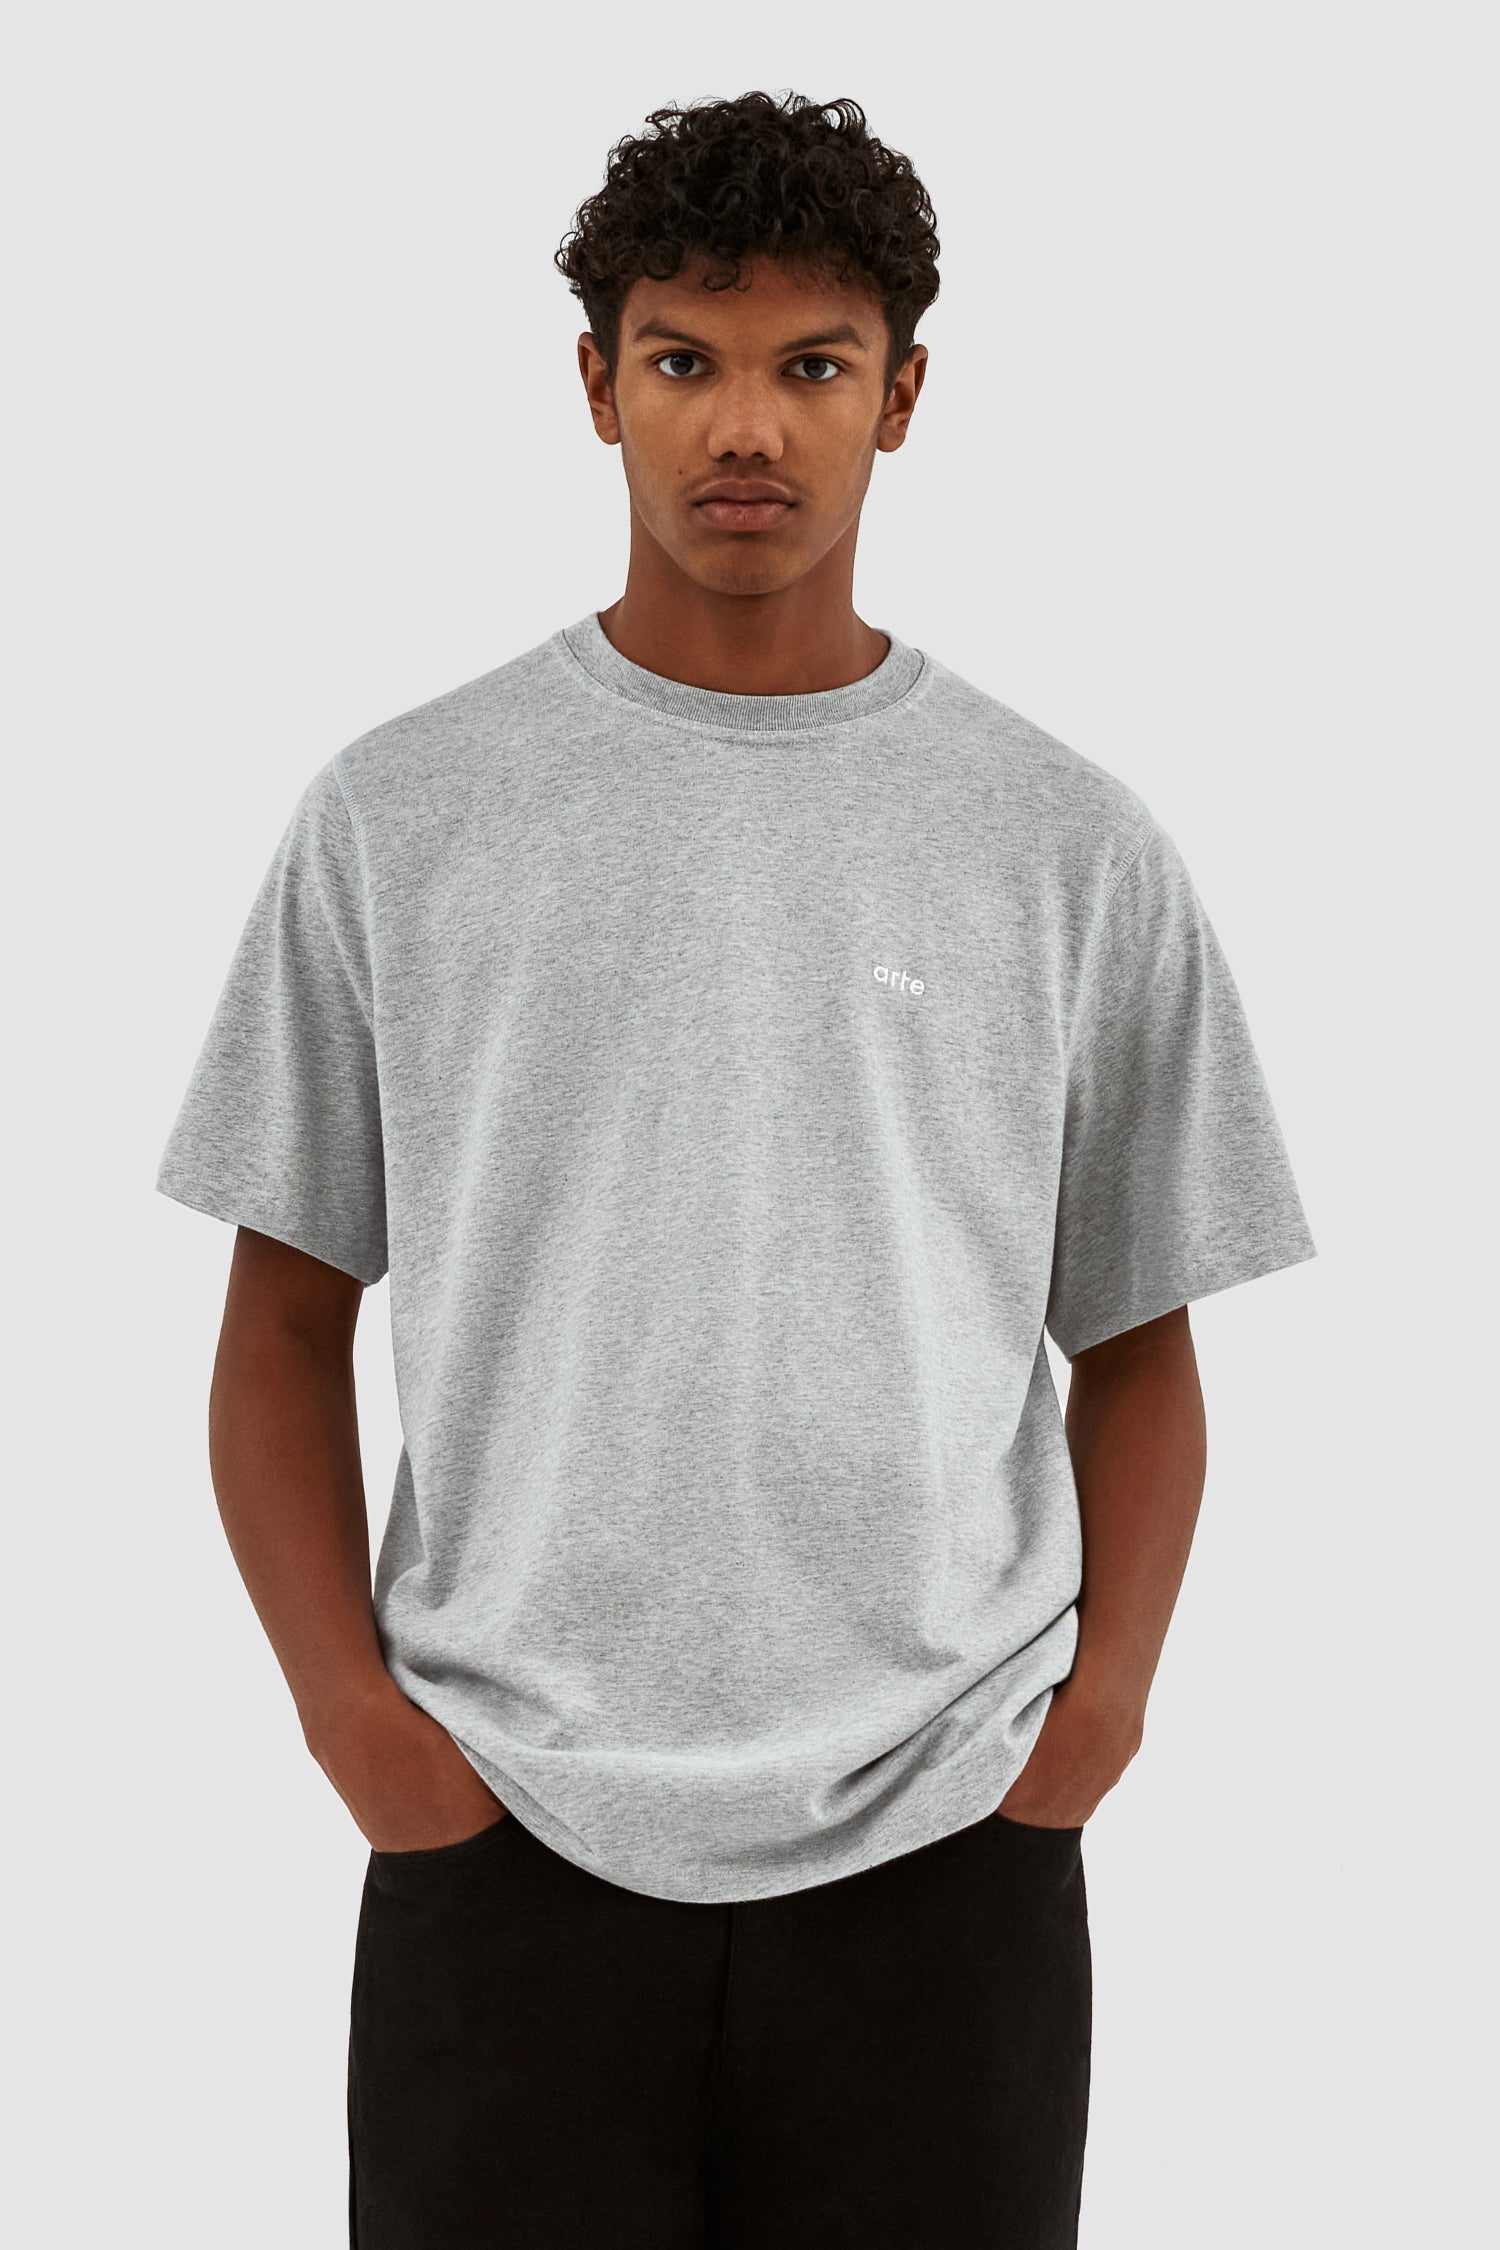 Teo Back Team T-shirt - Grey – Arte Antwerp